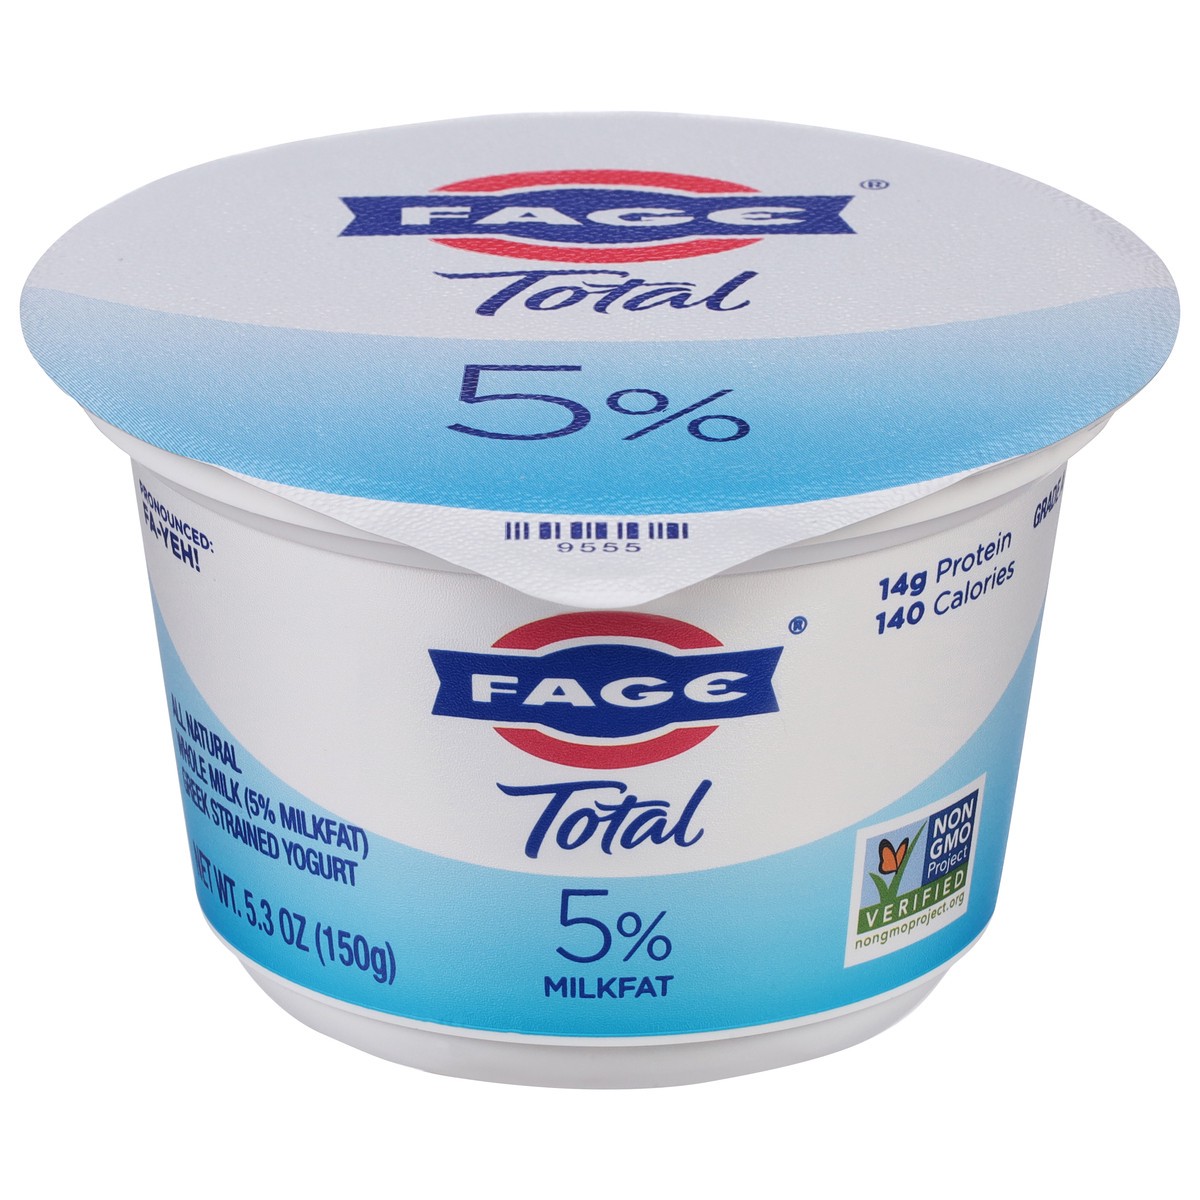 slide 3 of 13, Fage Total Greek Total 5% Greek Yogurt, 5.3 fl oz